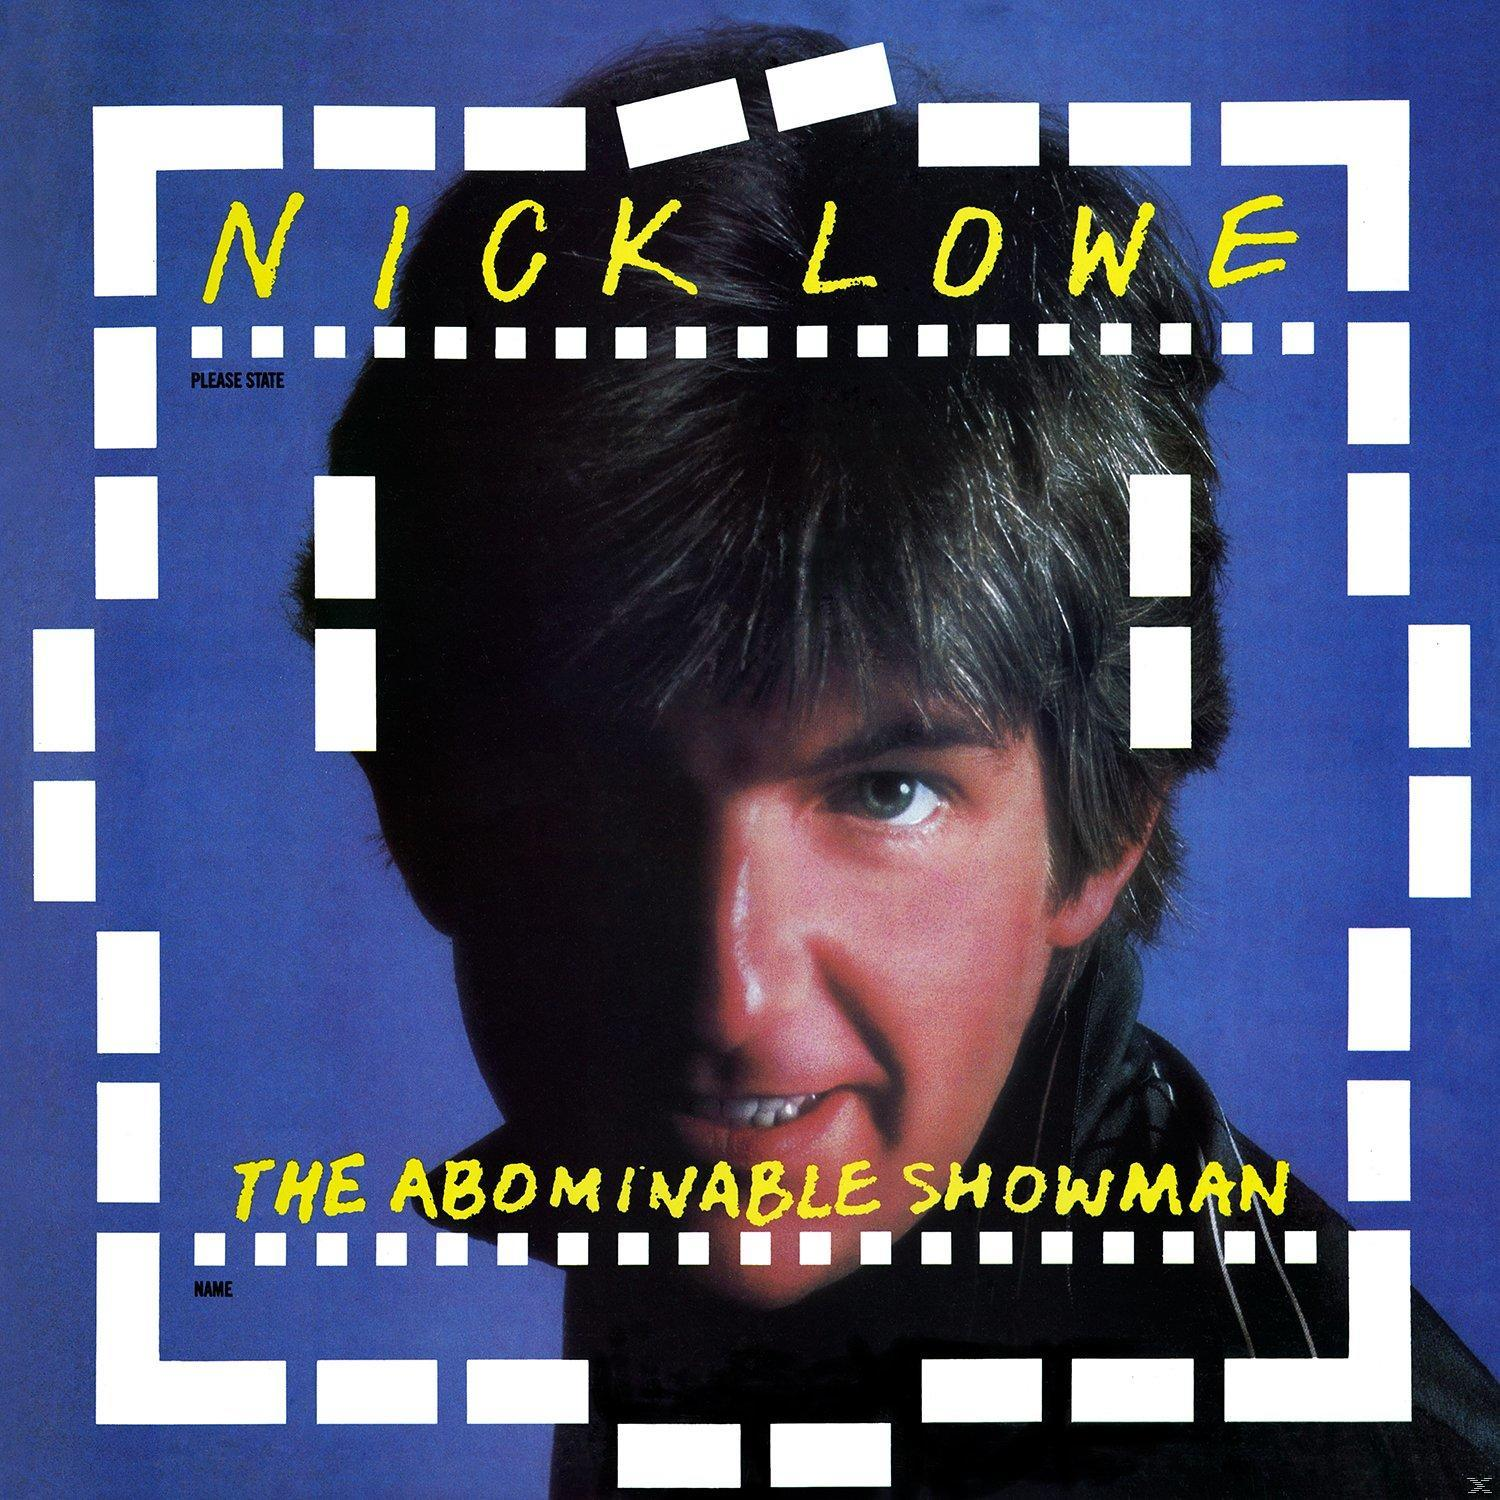 Nick Lowe - The (Vinyl) Shodowman Abominable 